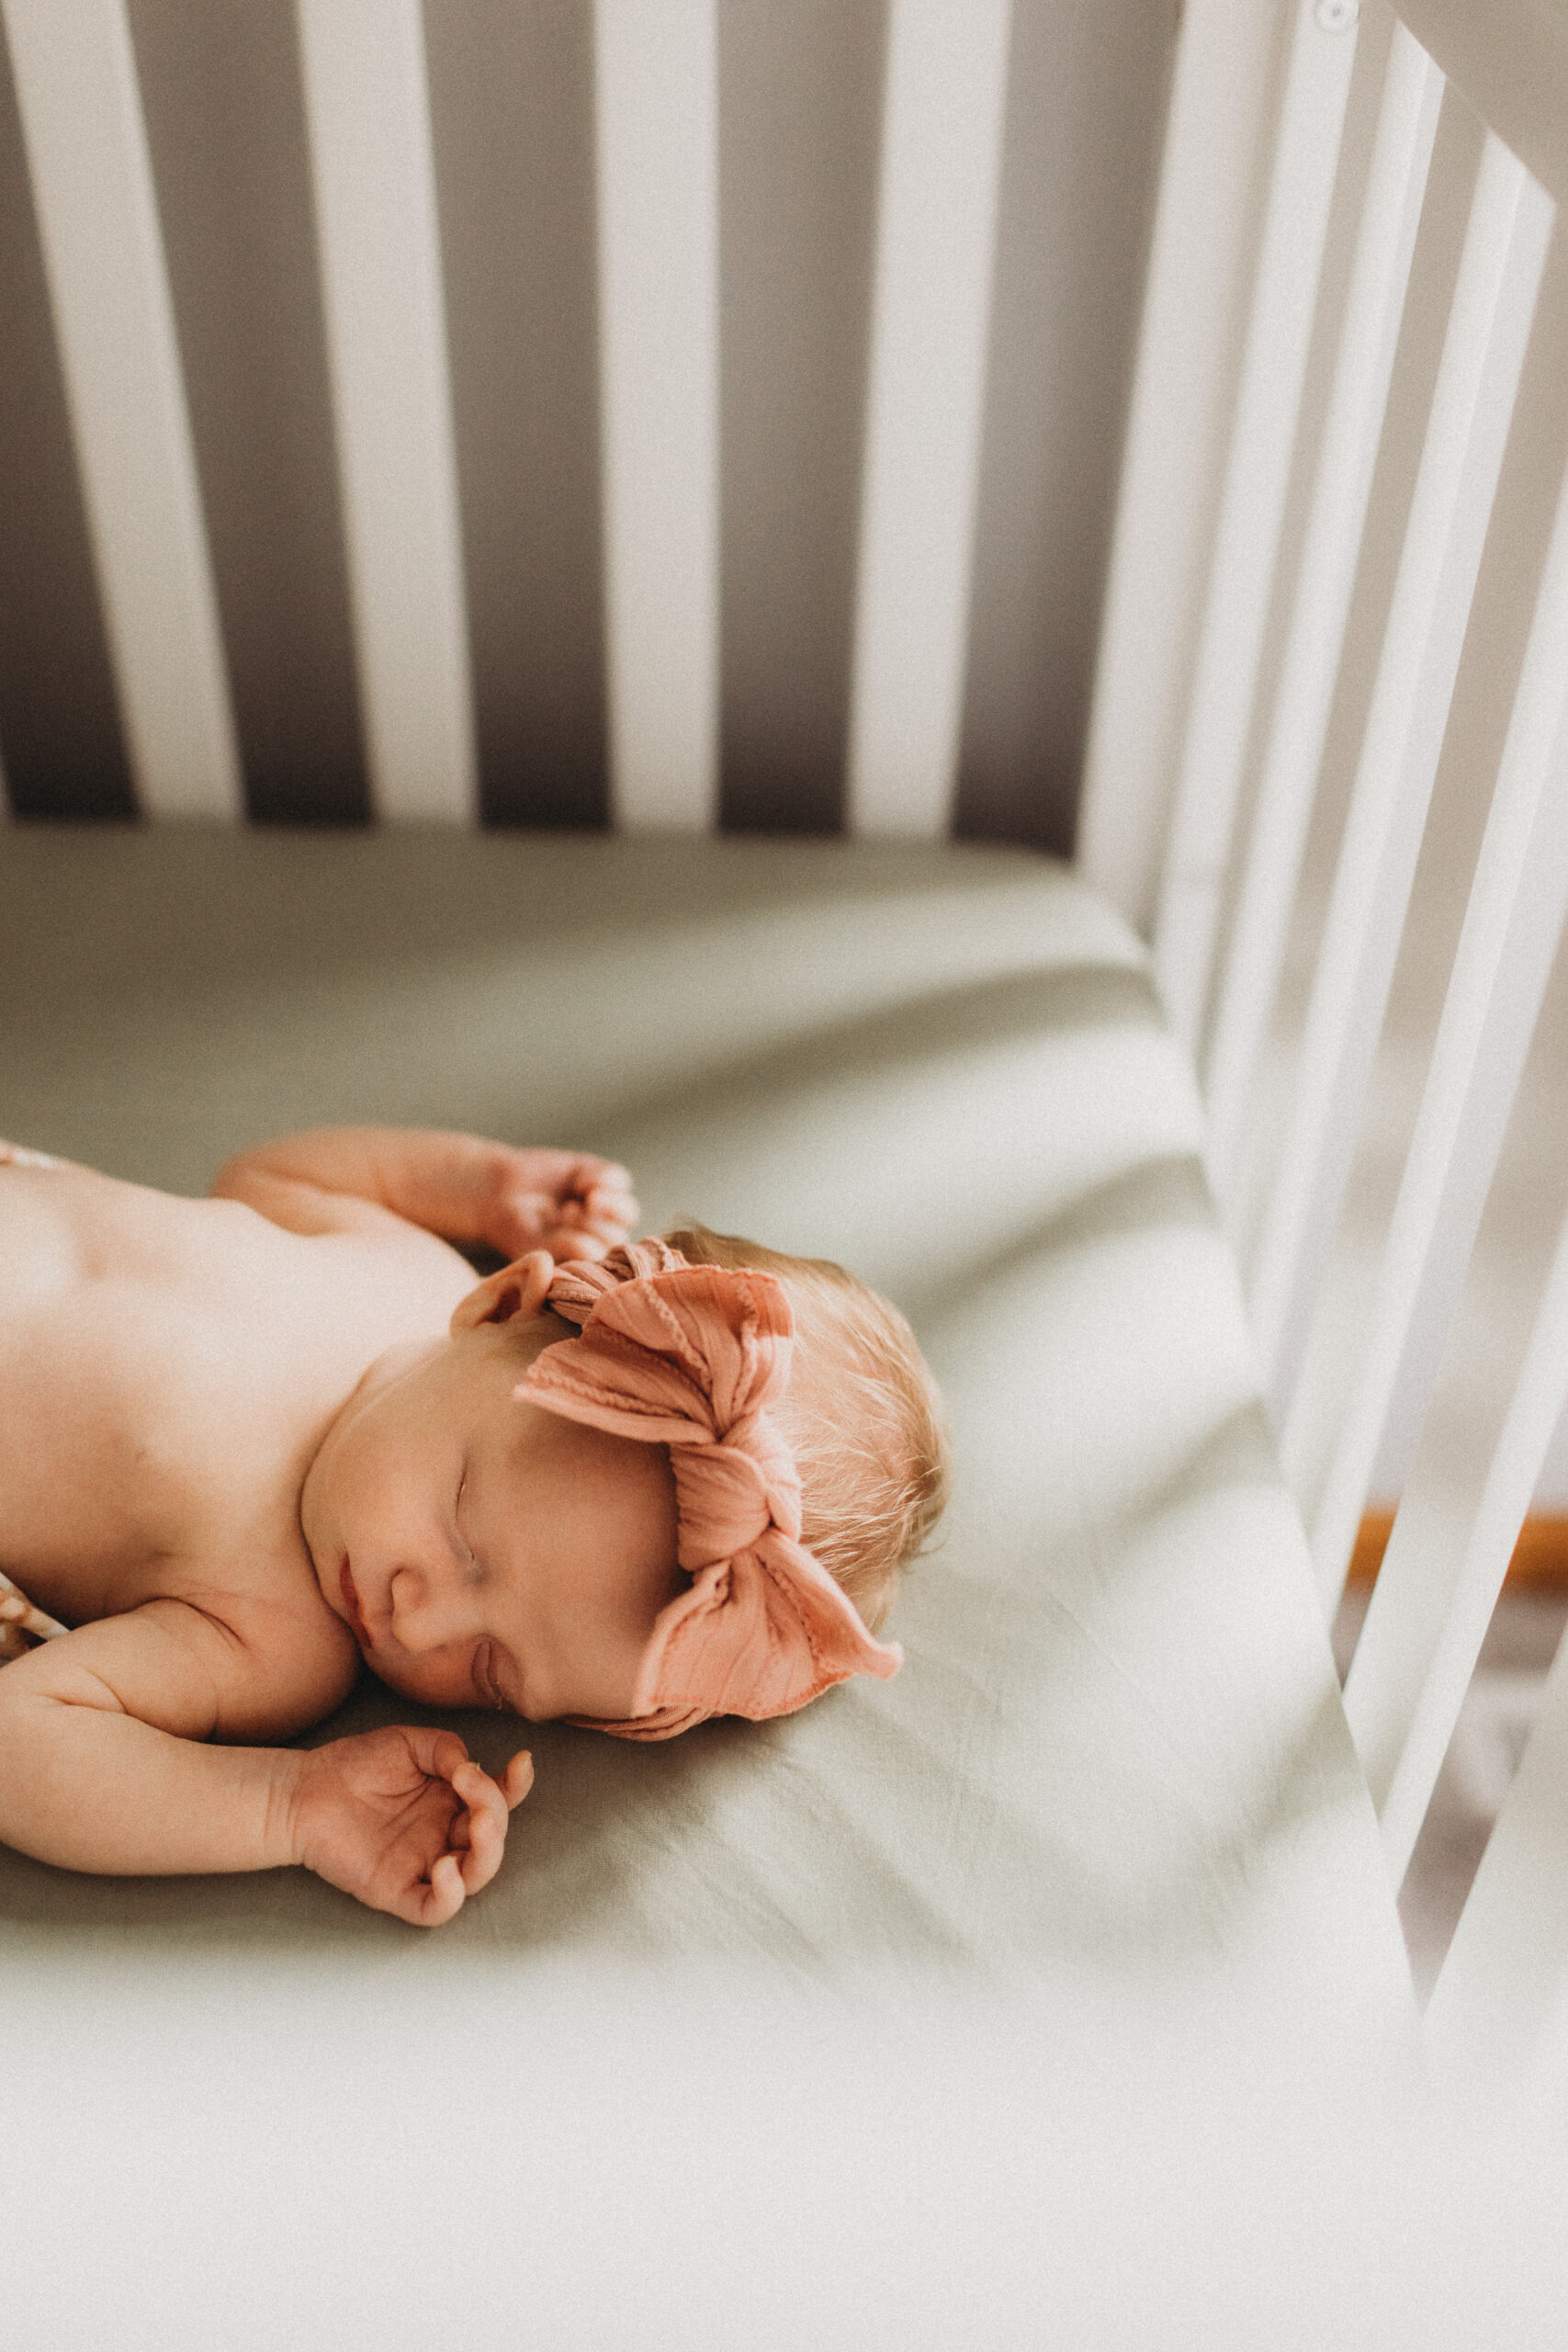 A newborn baby sleeps peacefully in her crib.